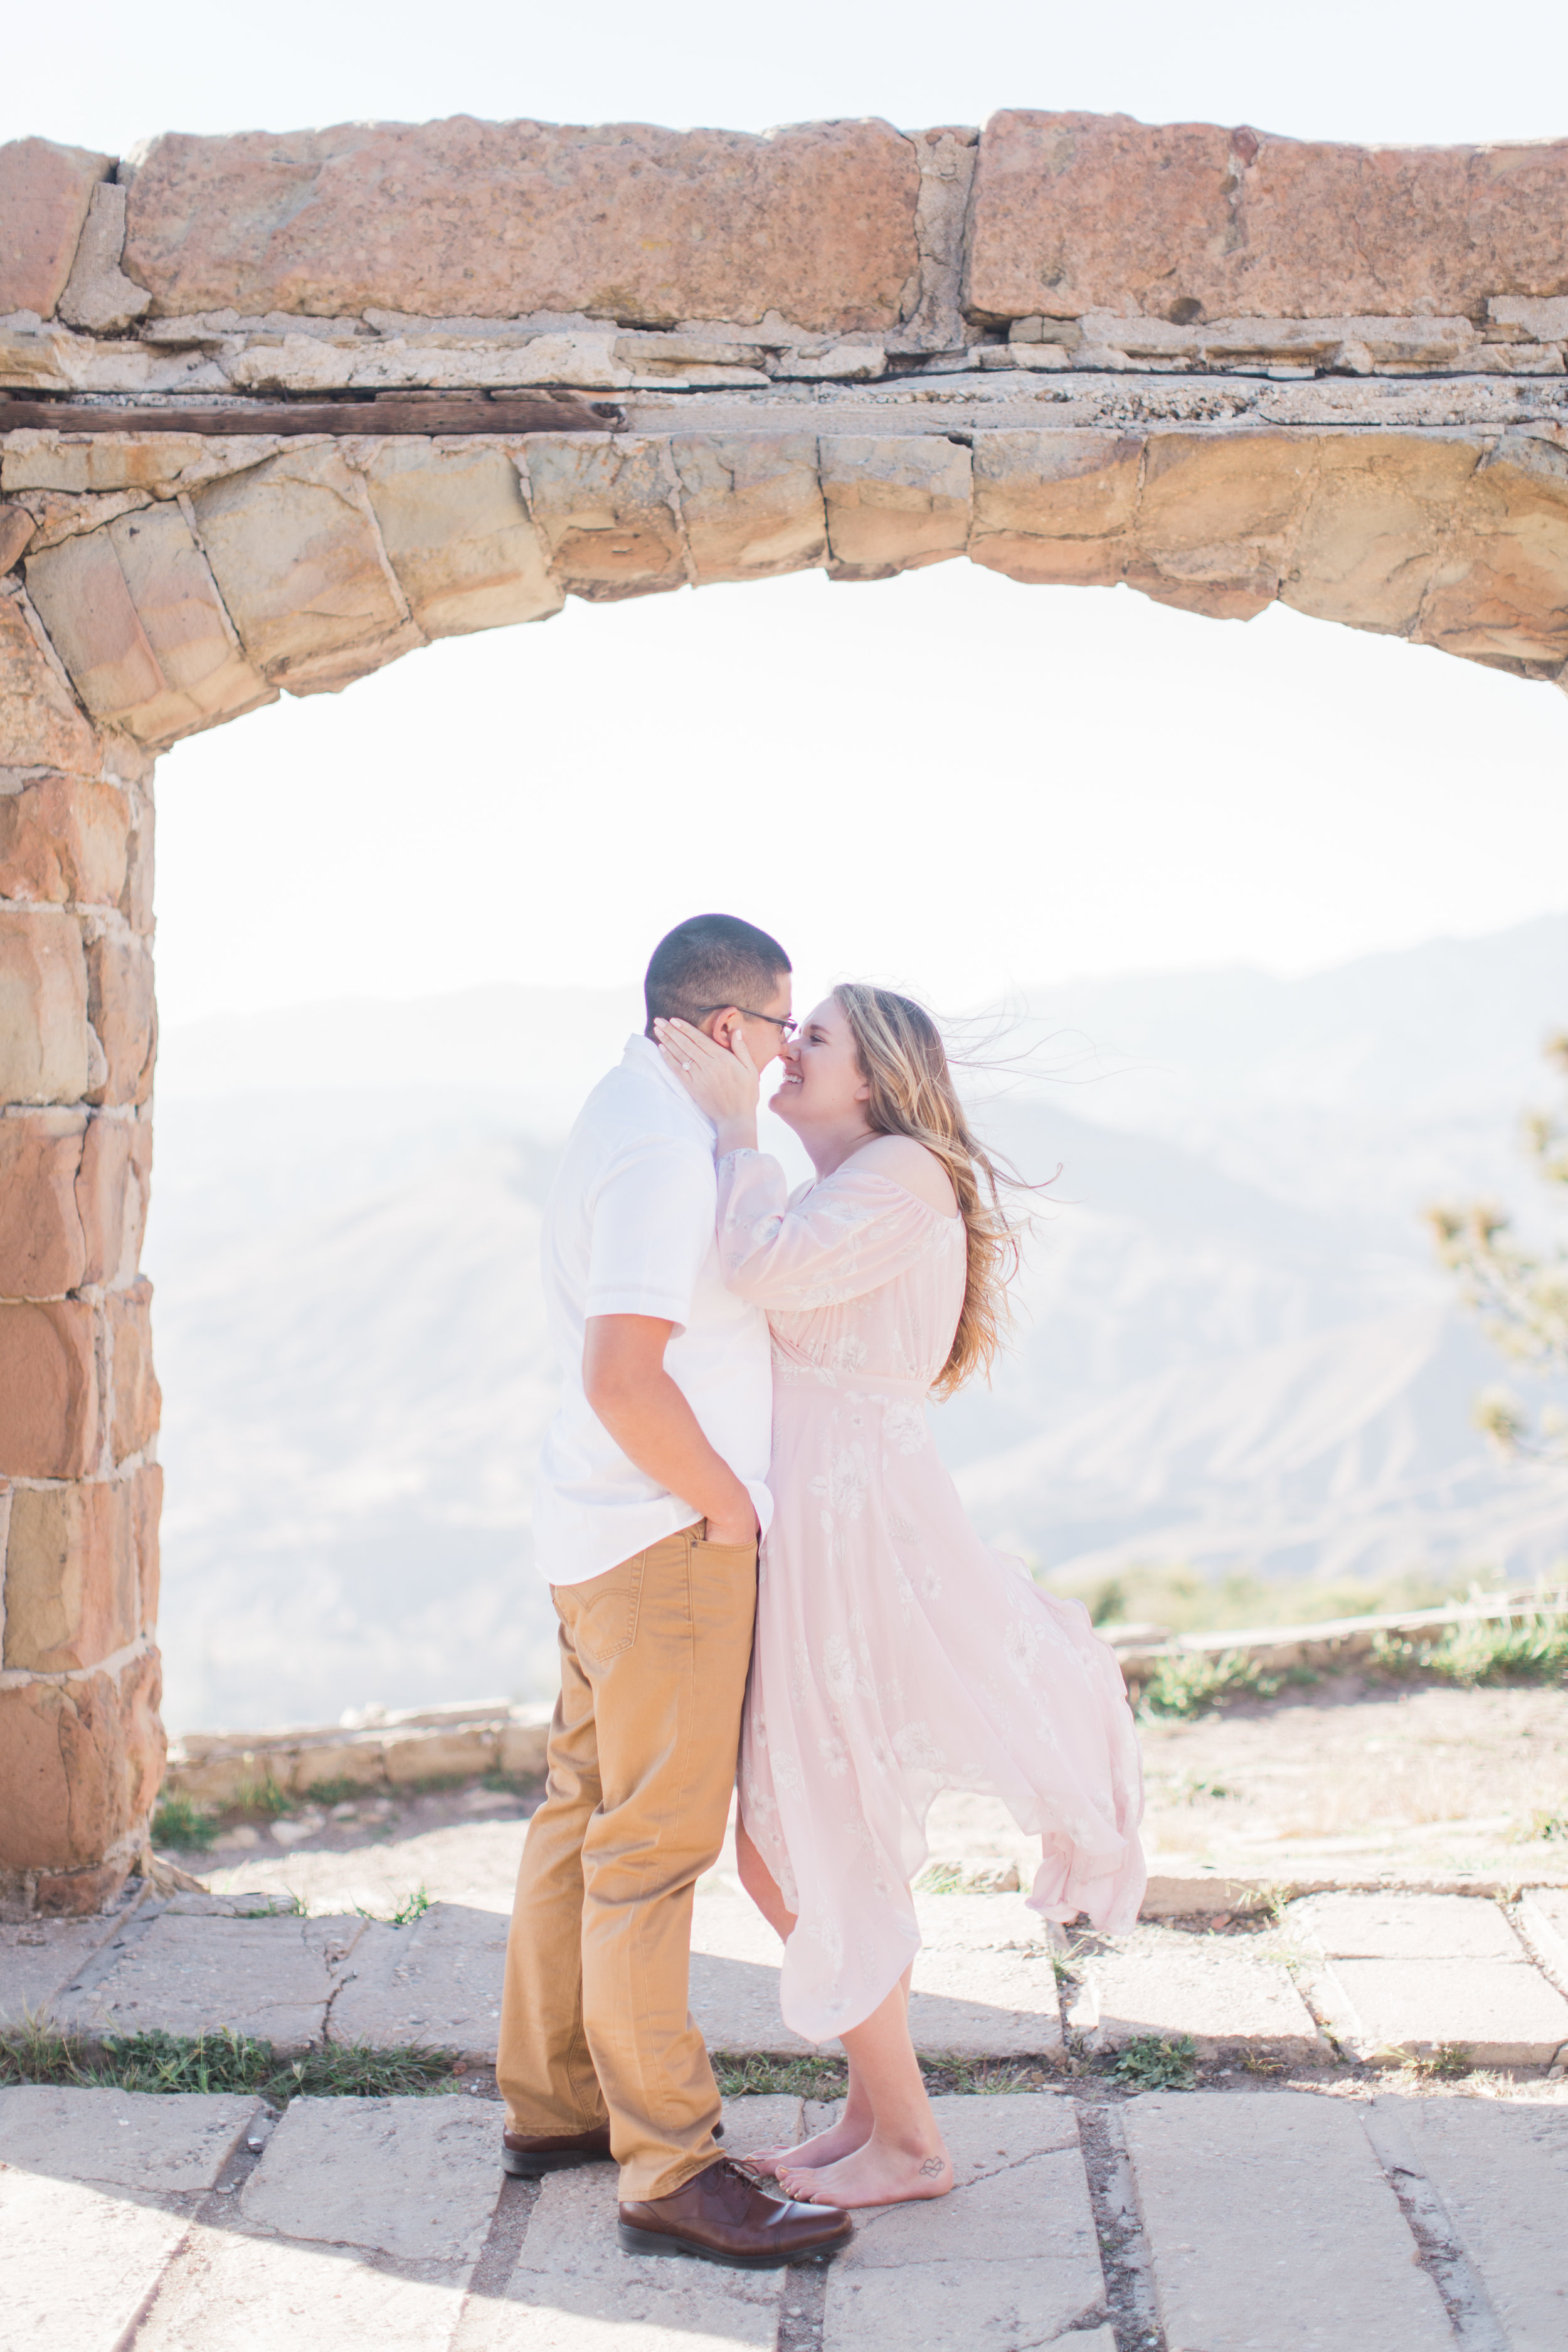 Santa Monica Mountains Engagement Photos - The Overwhelmed Bride Wedding Blog